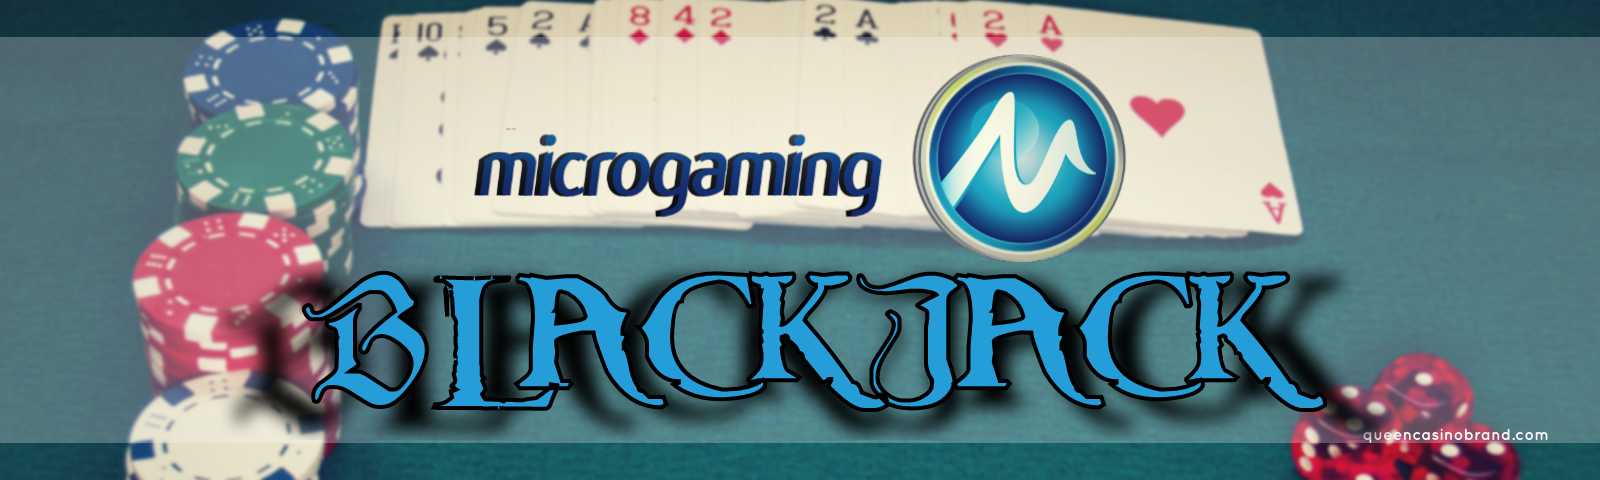 Microgaming Blackjack | Queen Casino Brand